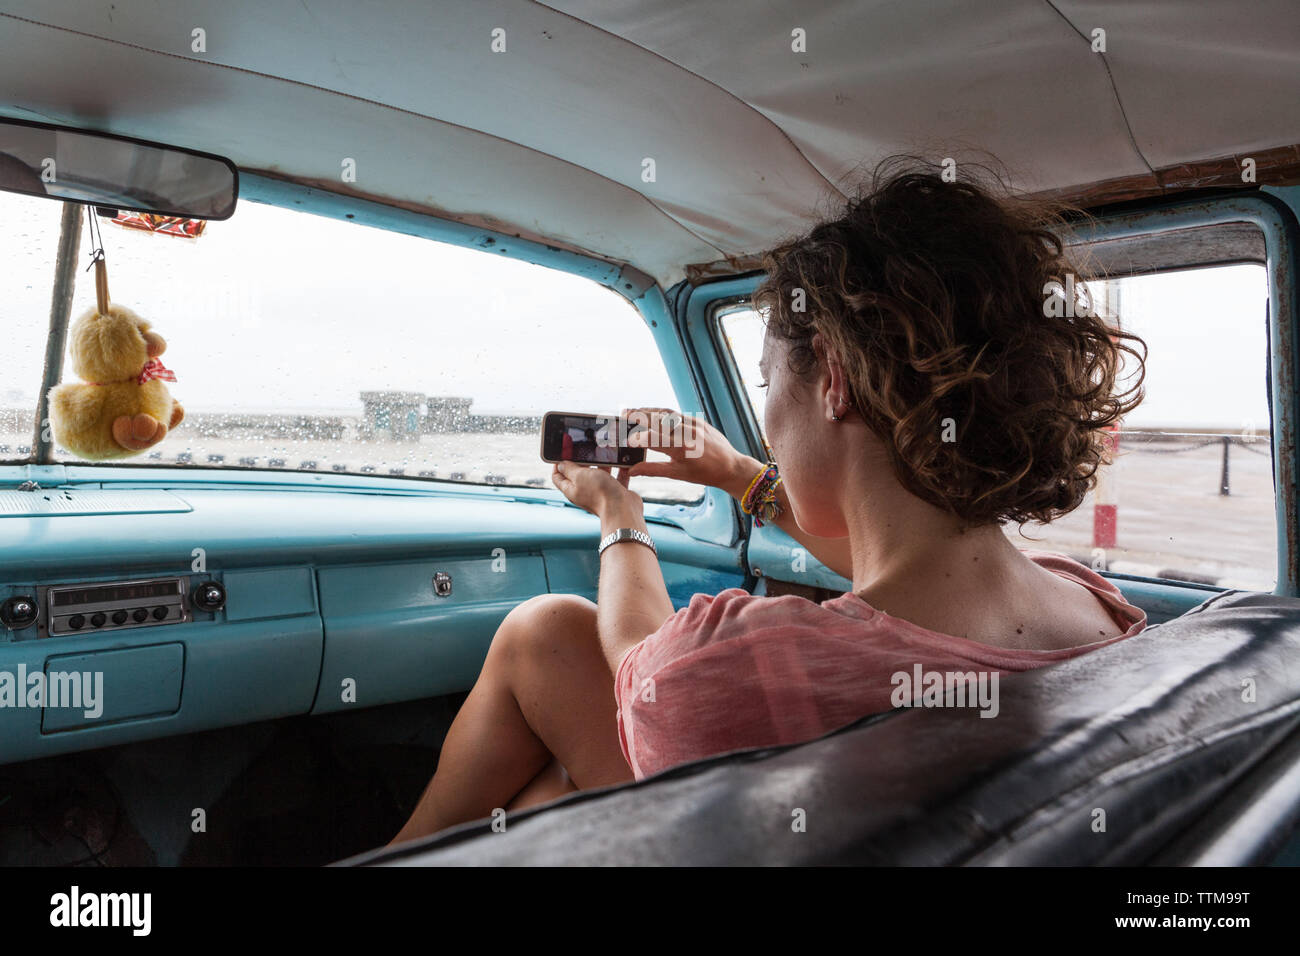 Western girl alone taking a selfie in an old vintage car in Cuba Stock Photo